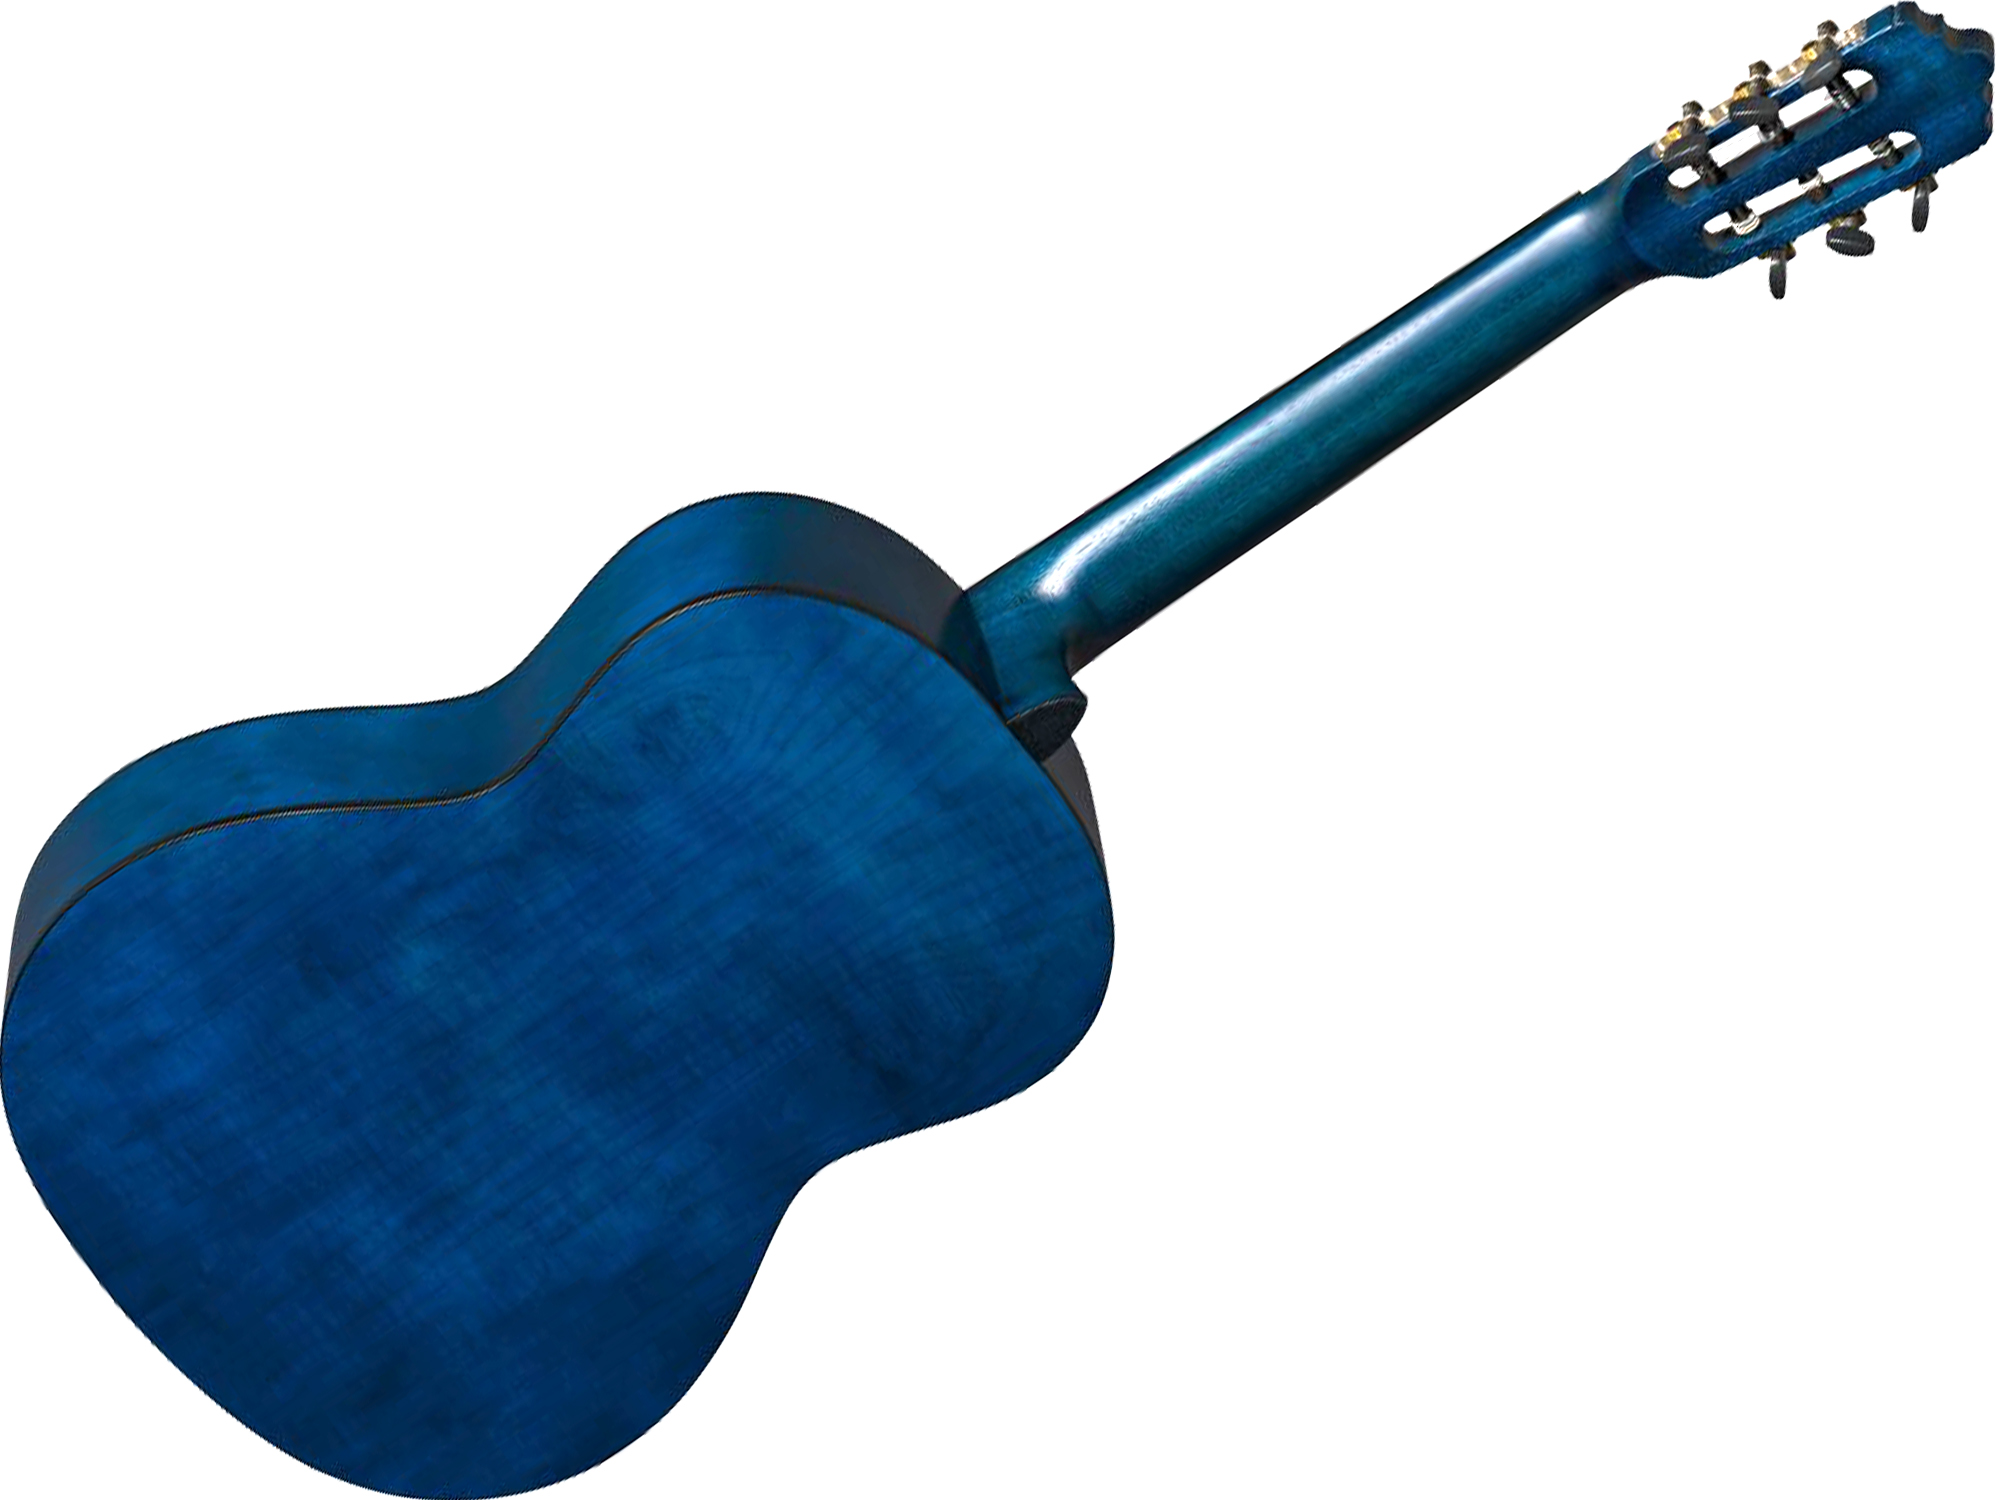 La Mancha Rubinito Azul SM/59 Konzertgitarre 3/4